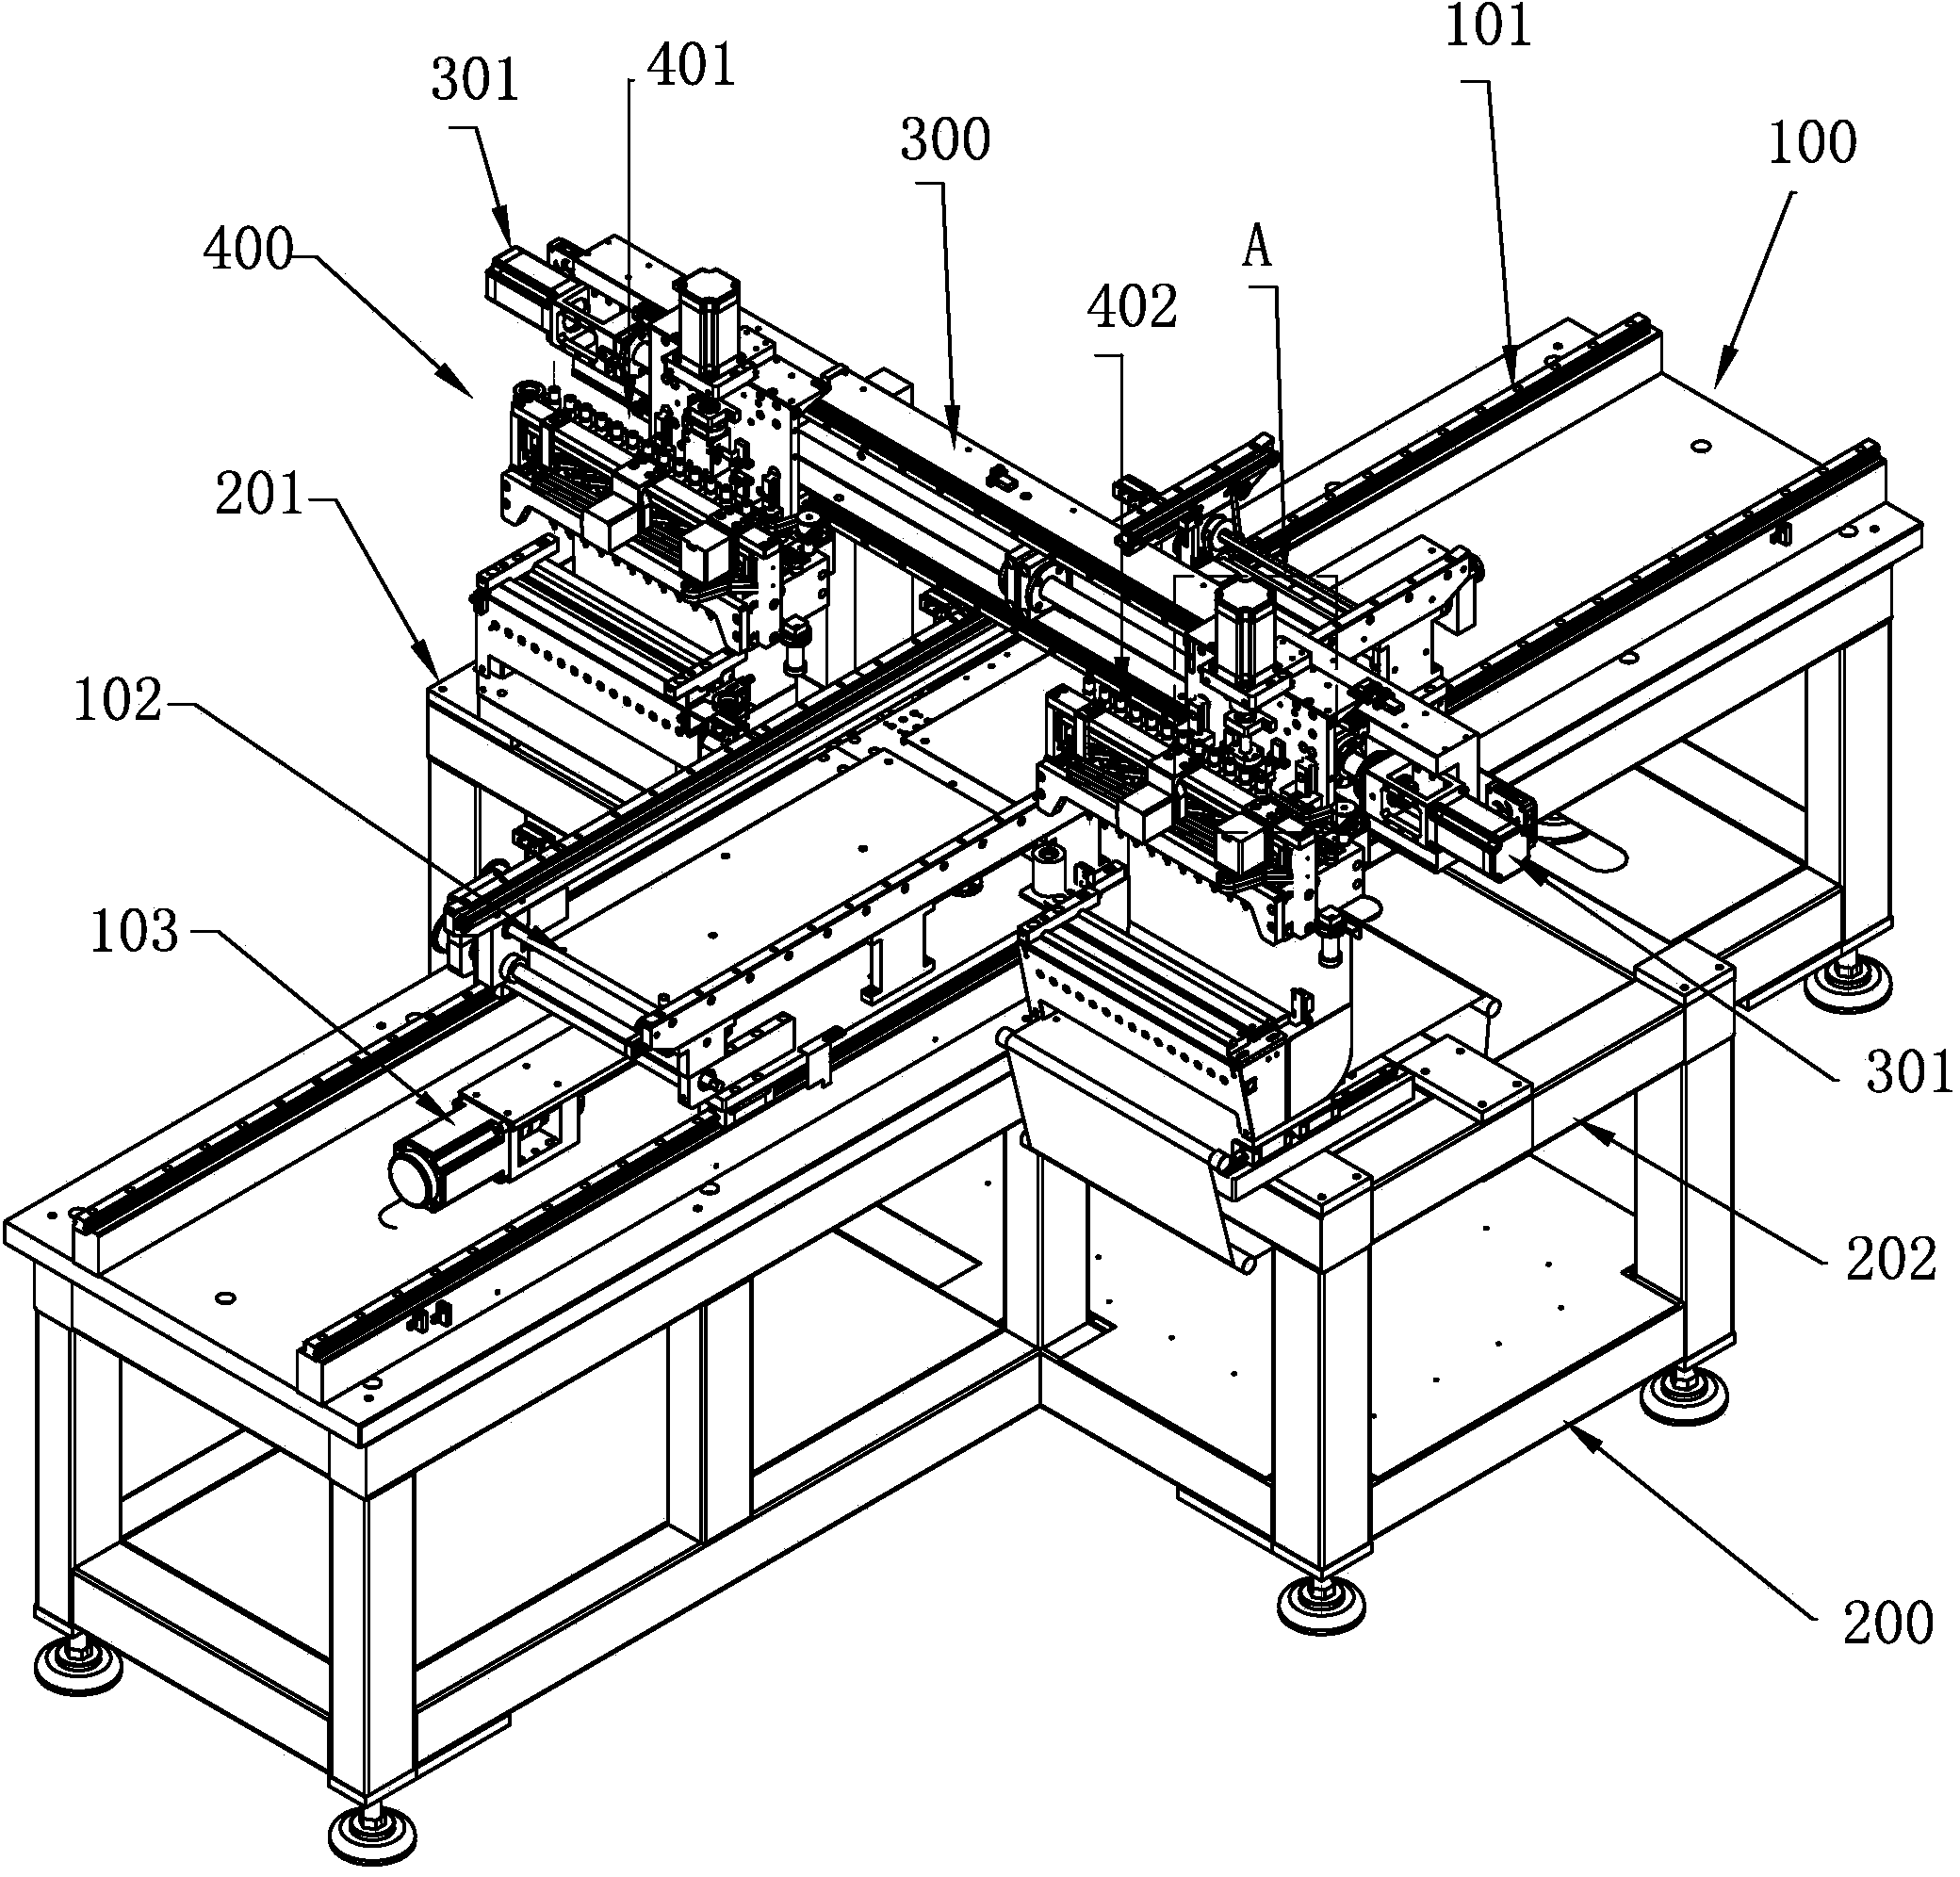 Matrix-type surface mounted device